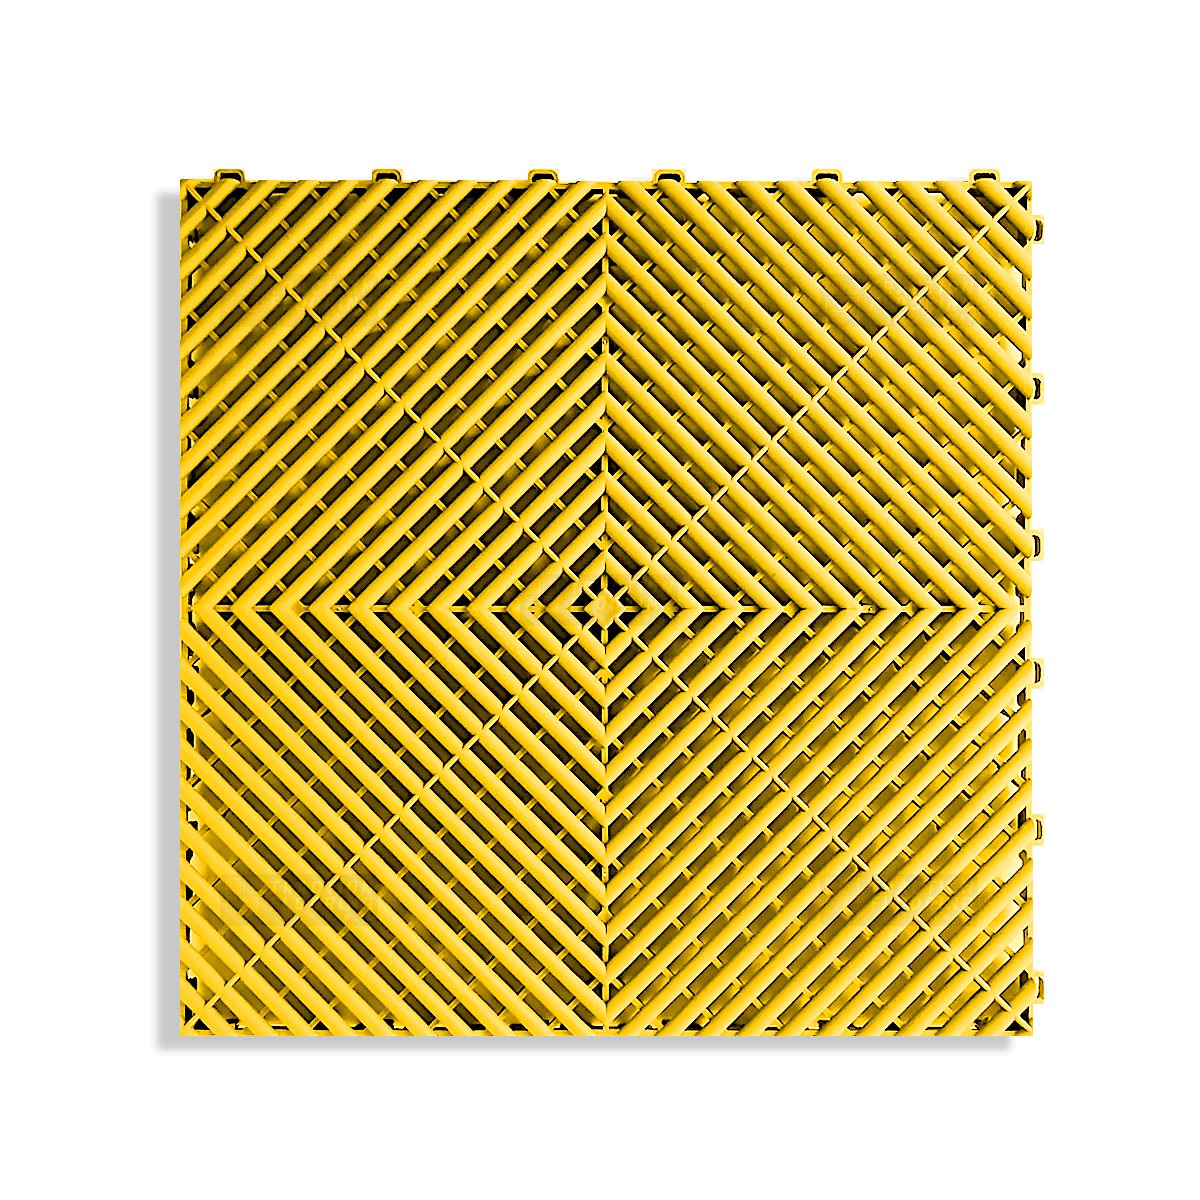 ULTRAGRID Garage Floor Tile 400x400x18mm, Speed Yellow